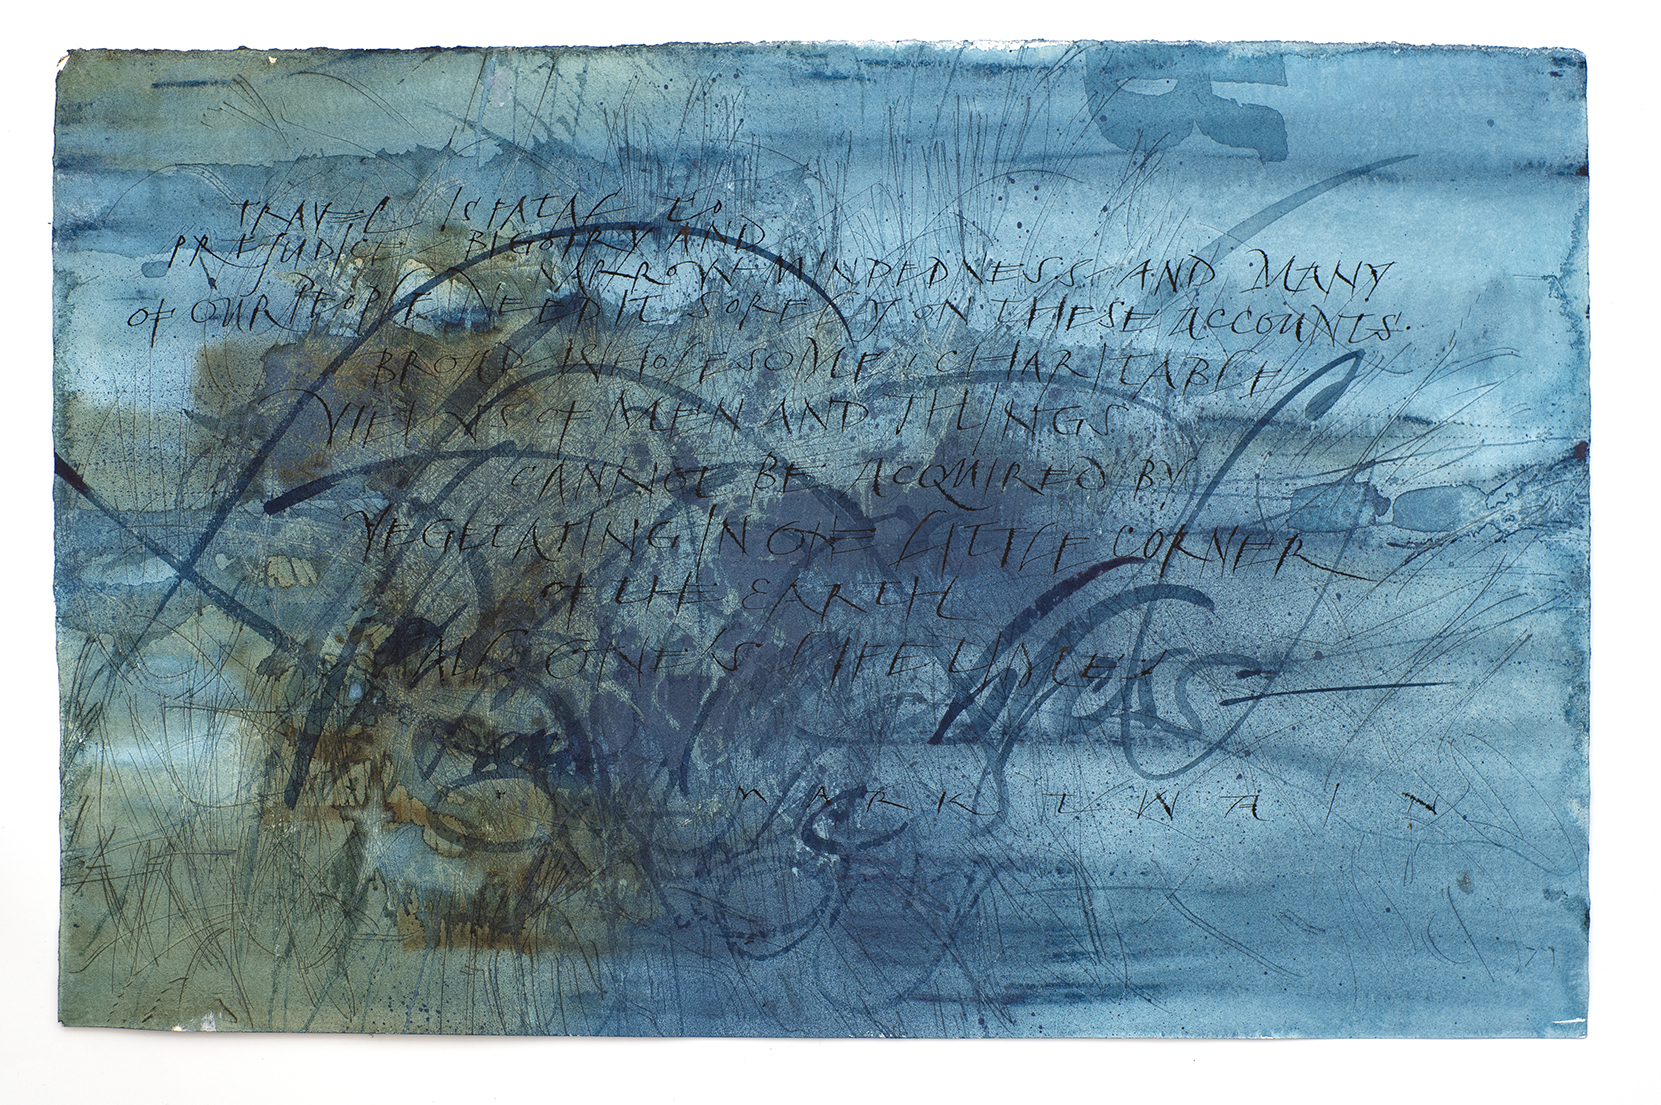 Gestural work on blue and green wash background by Elmo van Slingerland